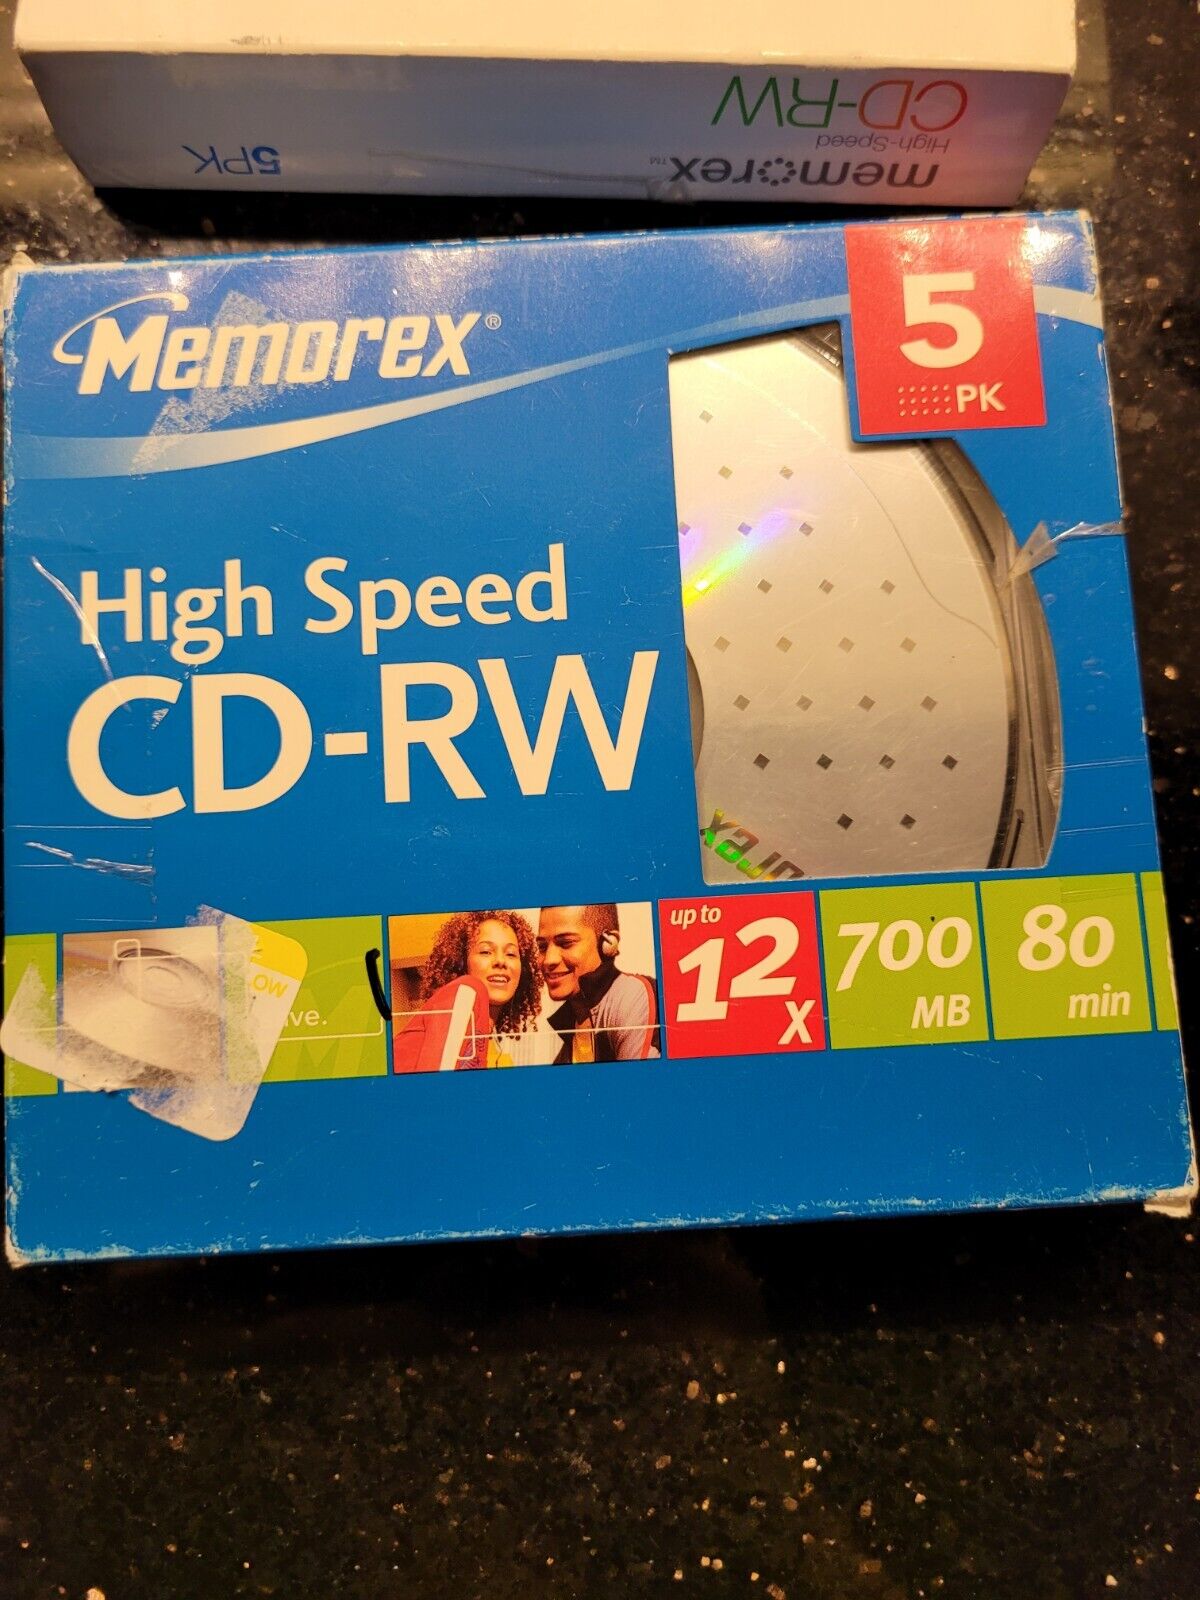 Memorex High Speed CD-RW 5 PACK 12x 700 MB 80 Min unused. OPEN box